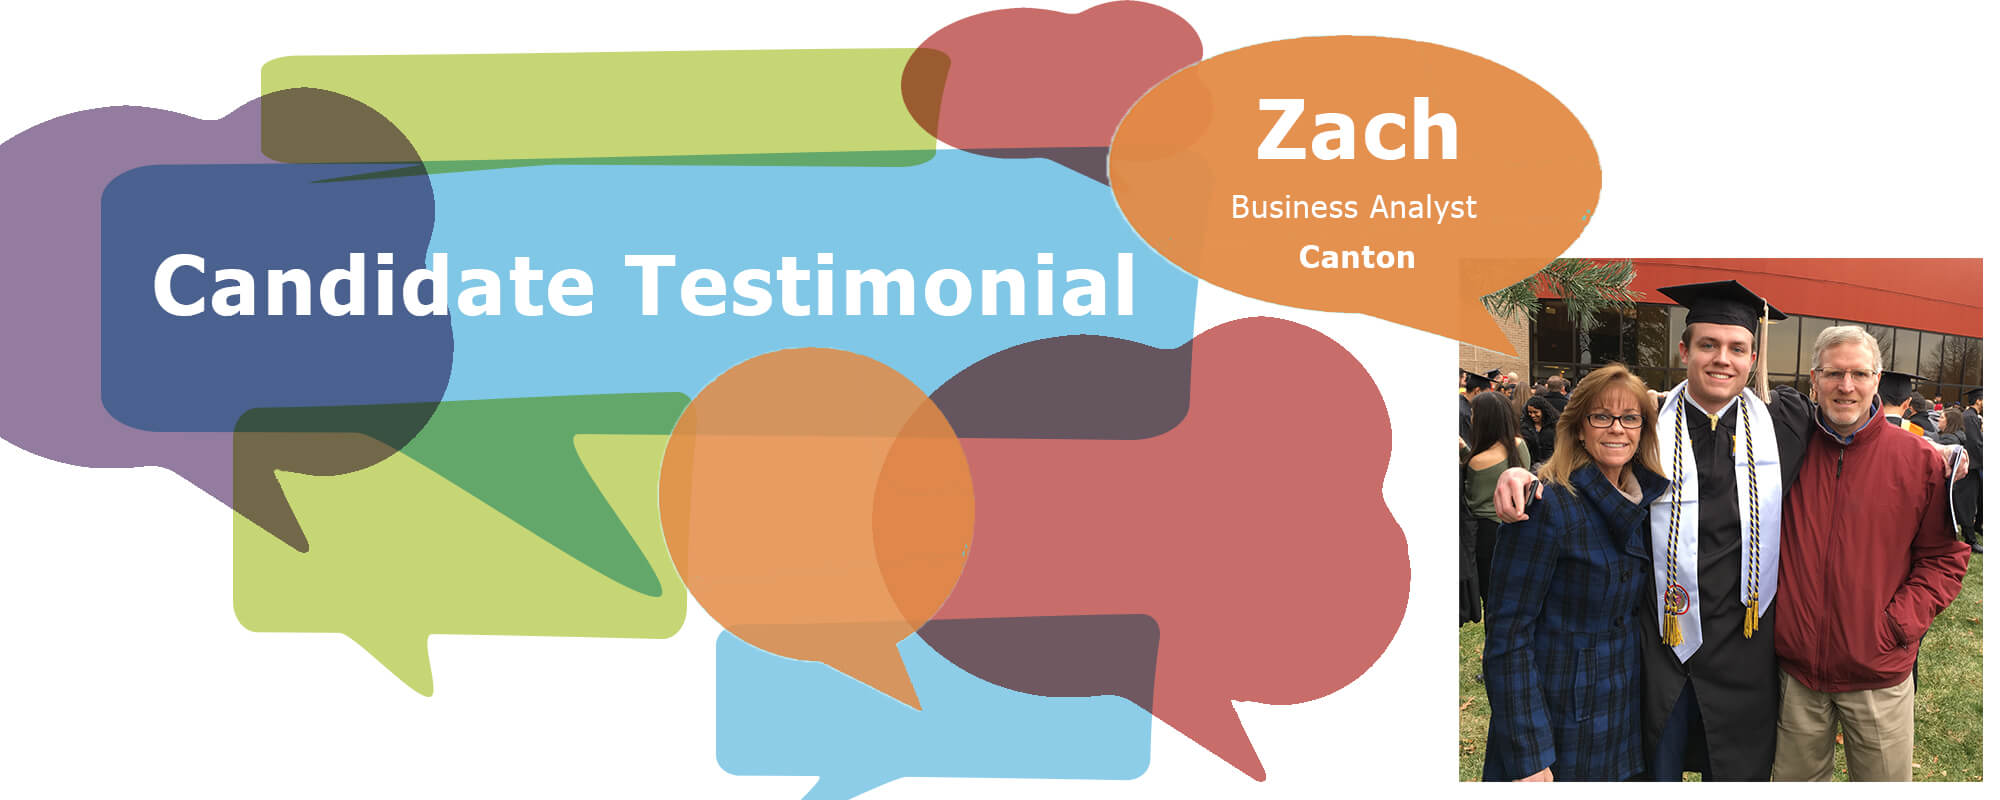 Candidate Testimonial: Zach T.